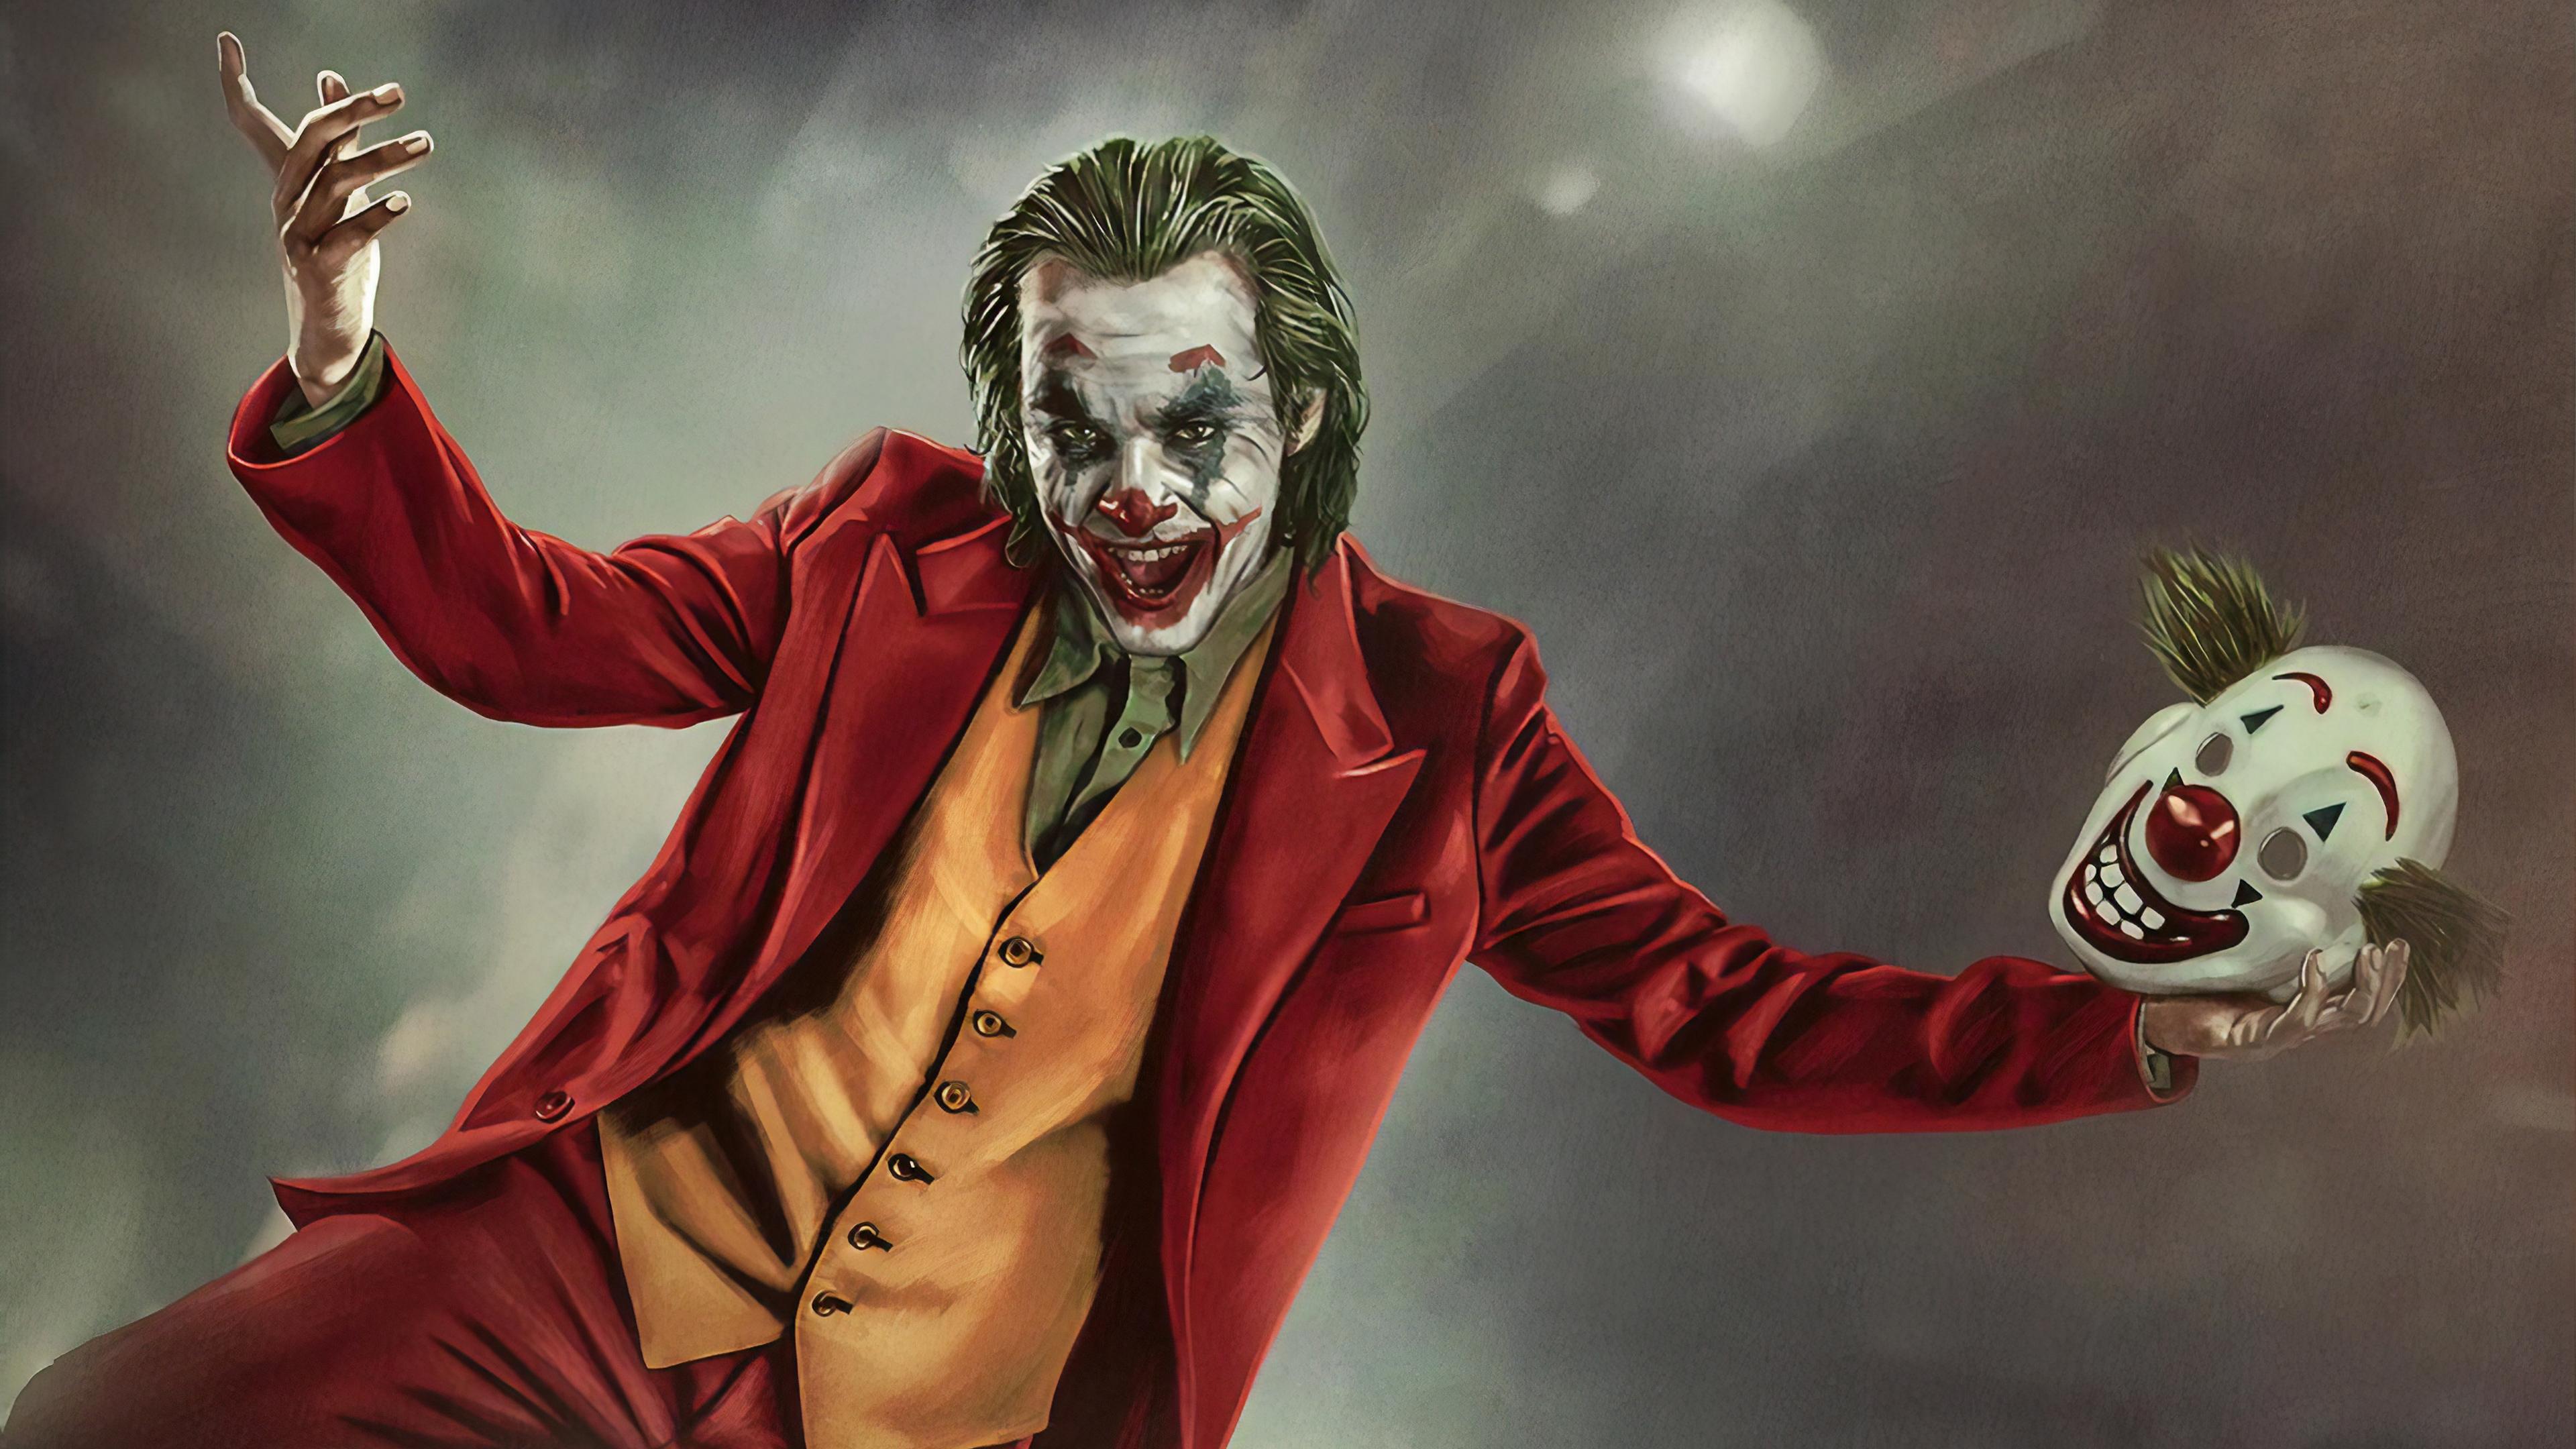 Wallpaper of Joker, Mask, Movie, DC, Art background & HD image